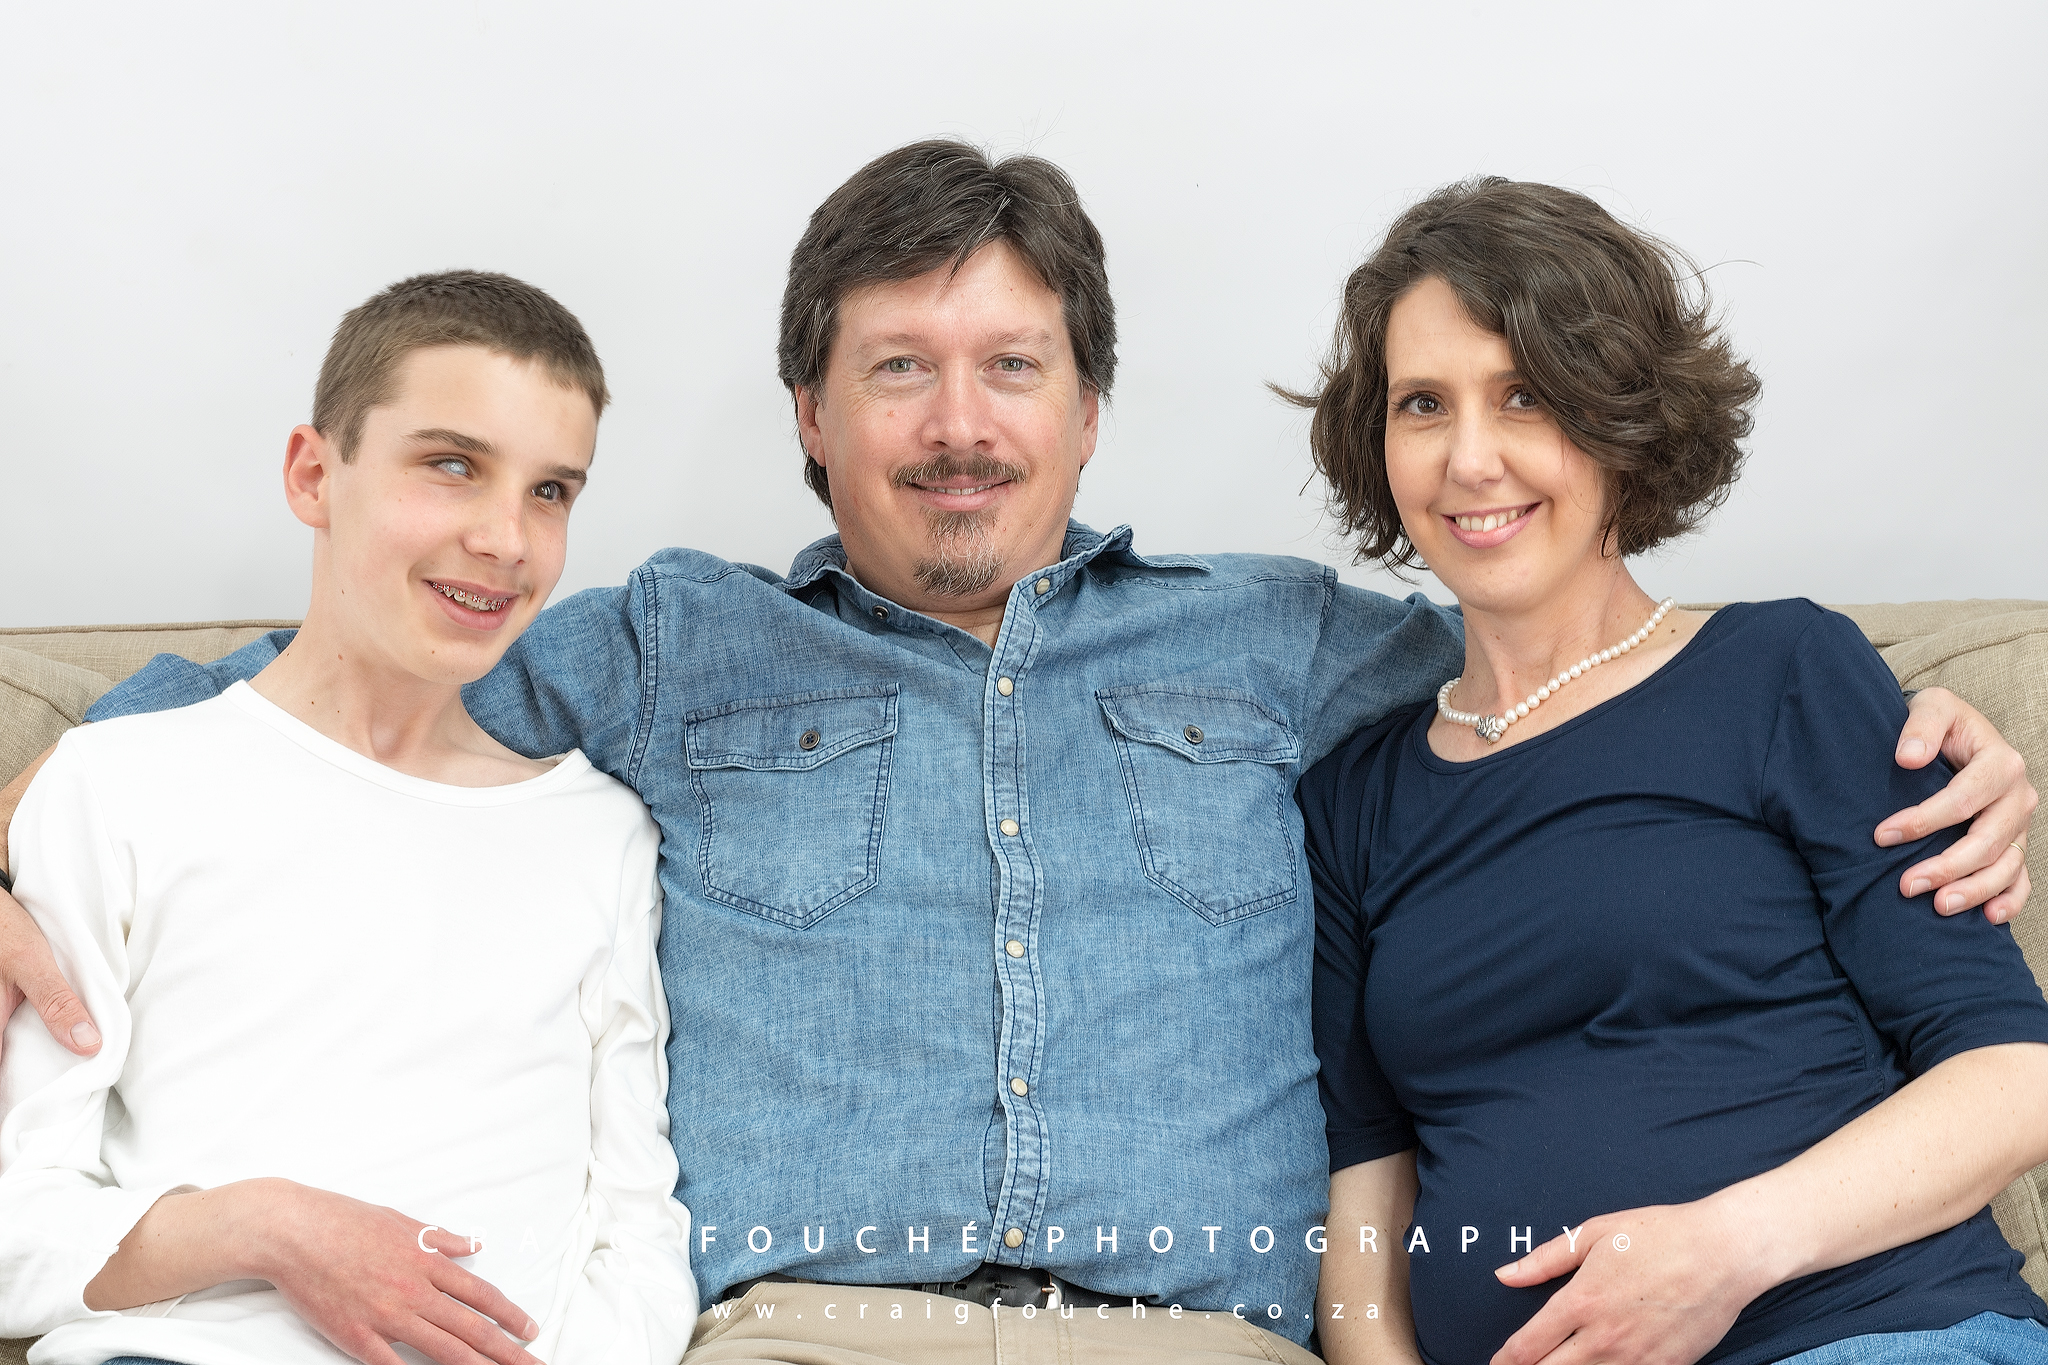 Family Portraiture Shoot – The Smith Family